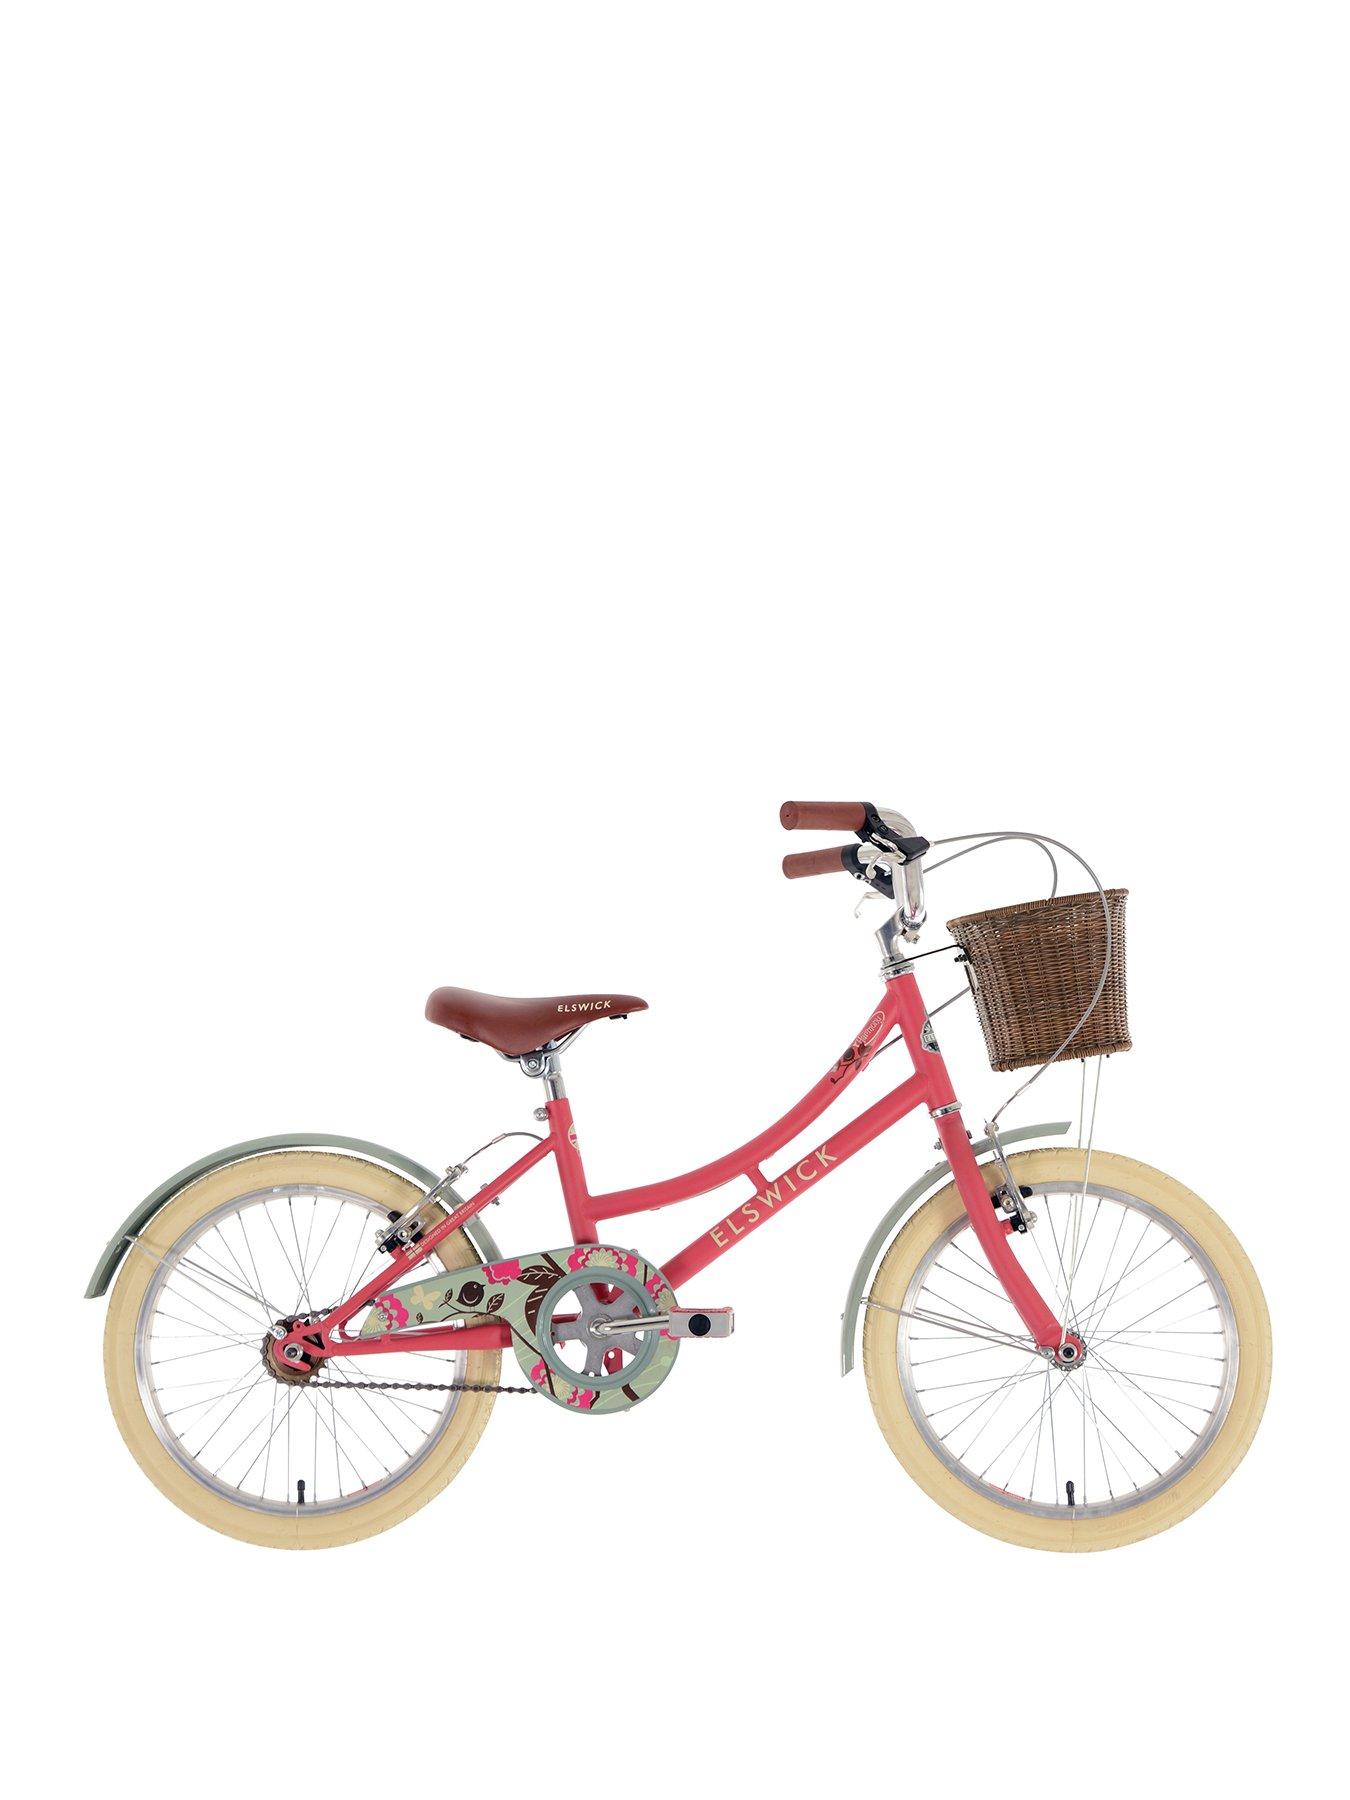 18 inch wheel girls bike